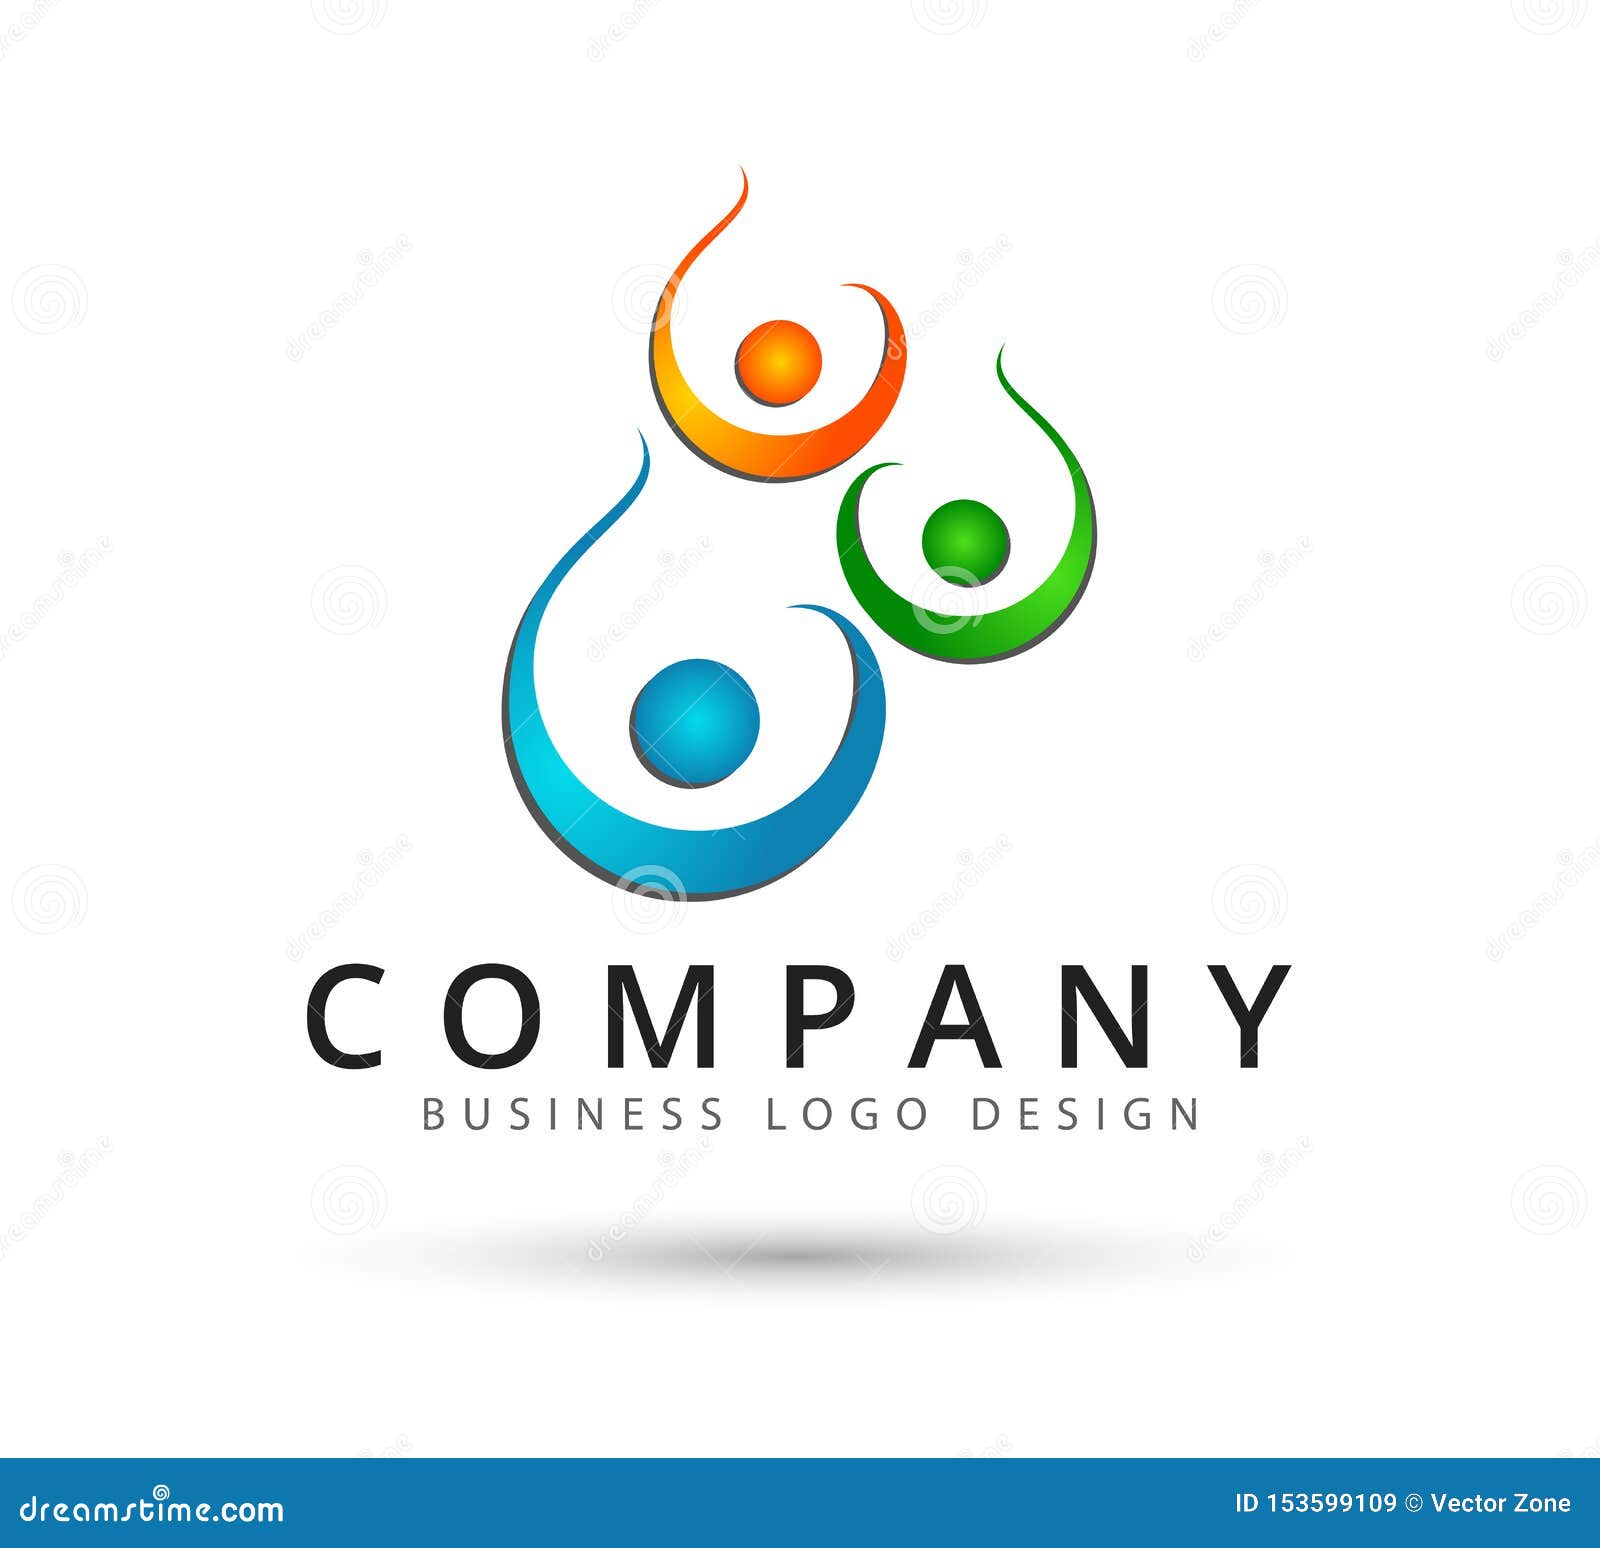 Teamwork Management People Group Together New Concept Logo. Stock ...